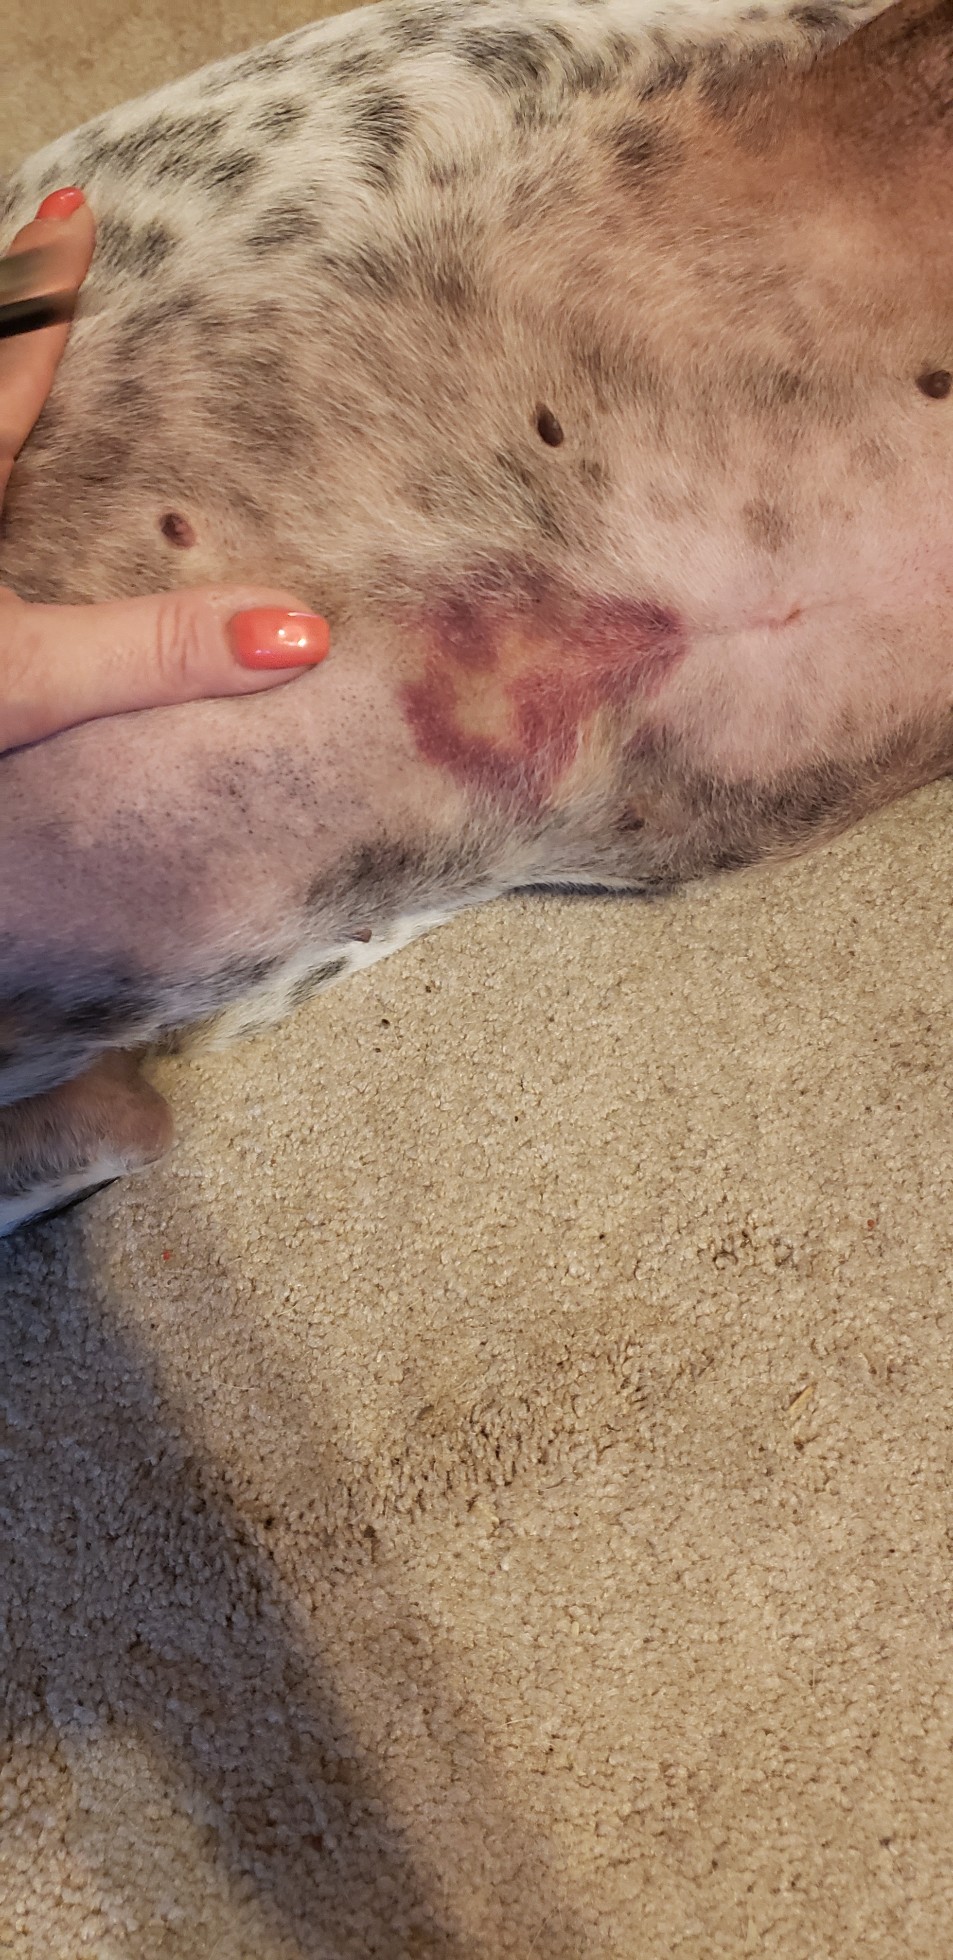 what do dog bruises look like